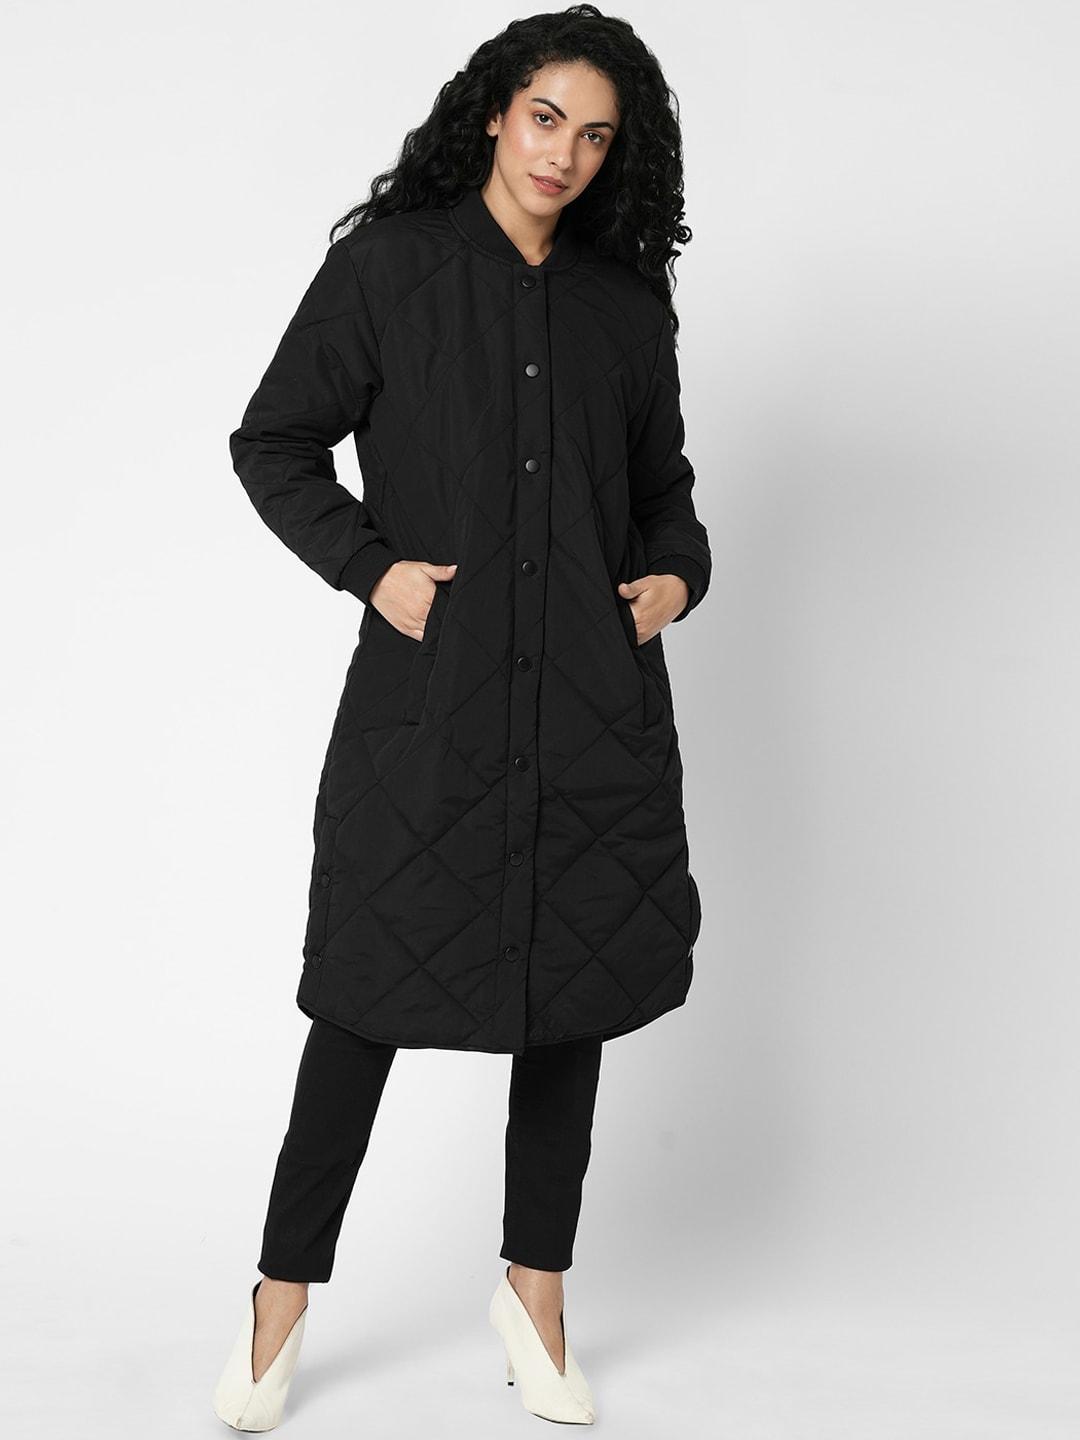 vero moda lightweight longline quilted jacket